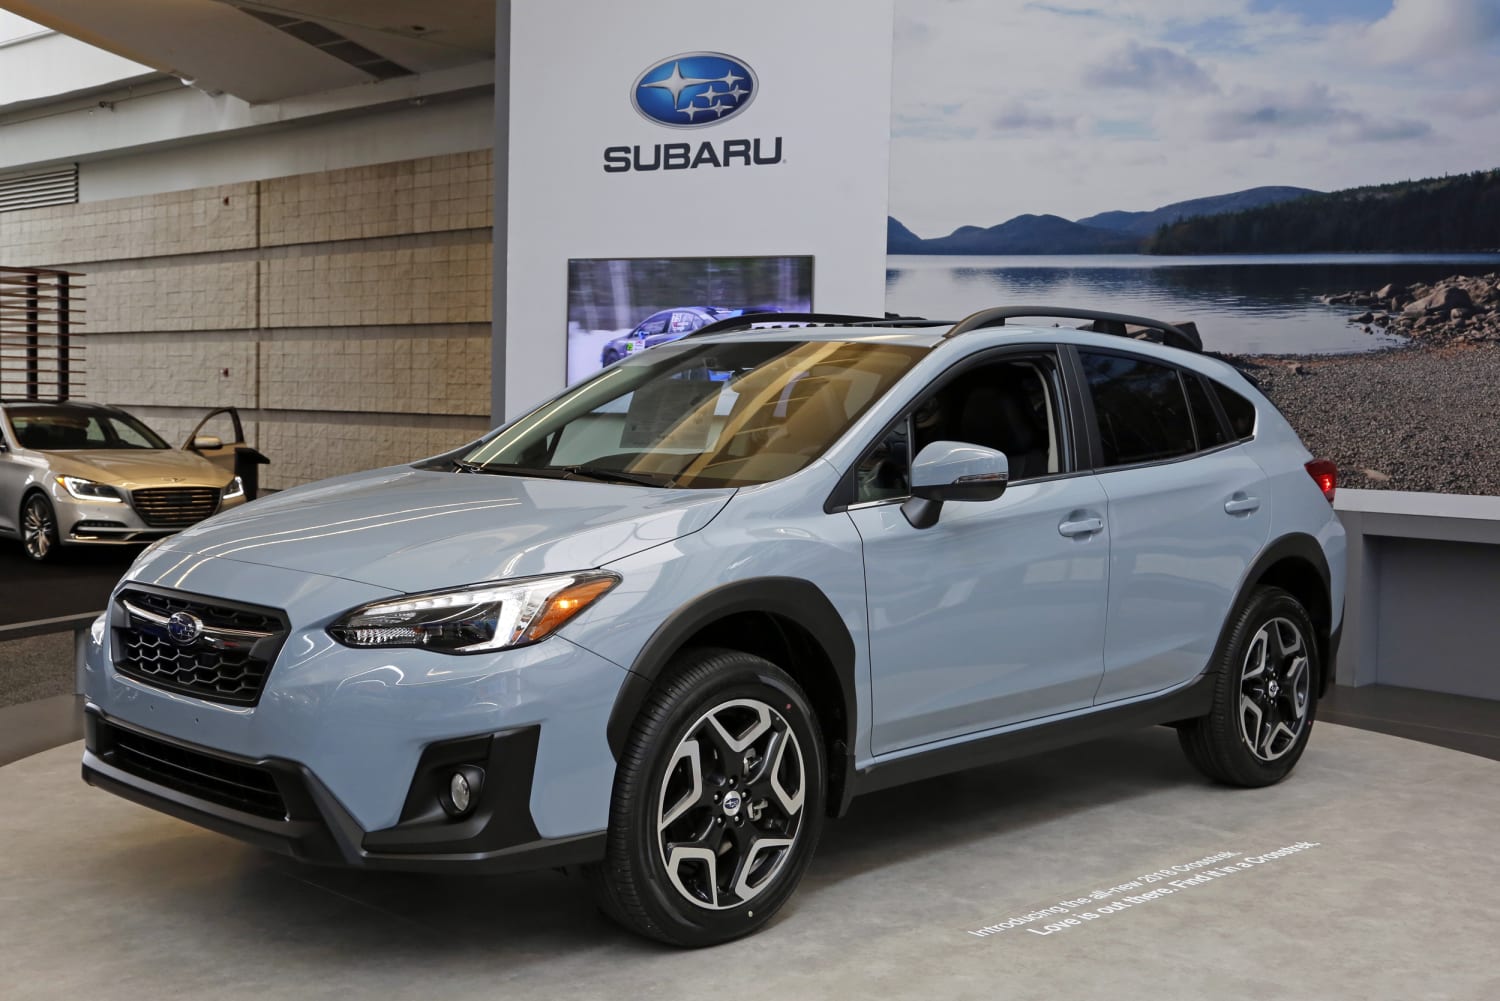 Subaru recalls 400,000 cars, SUVs for engine control, debris trouble